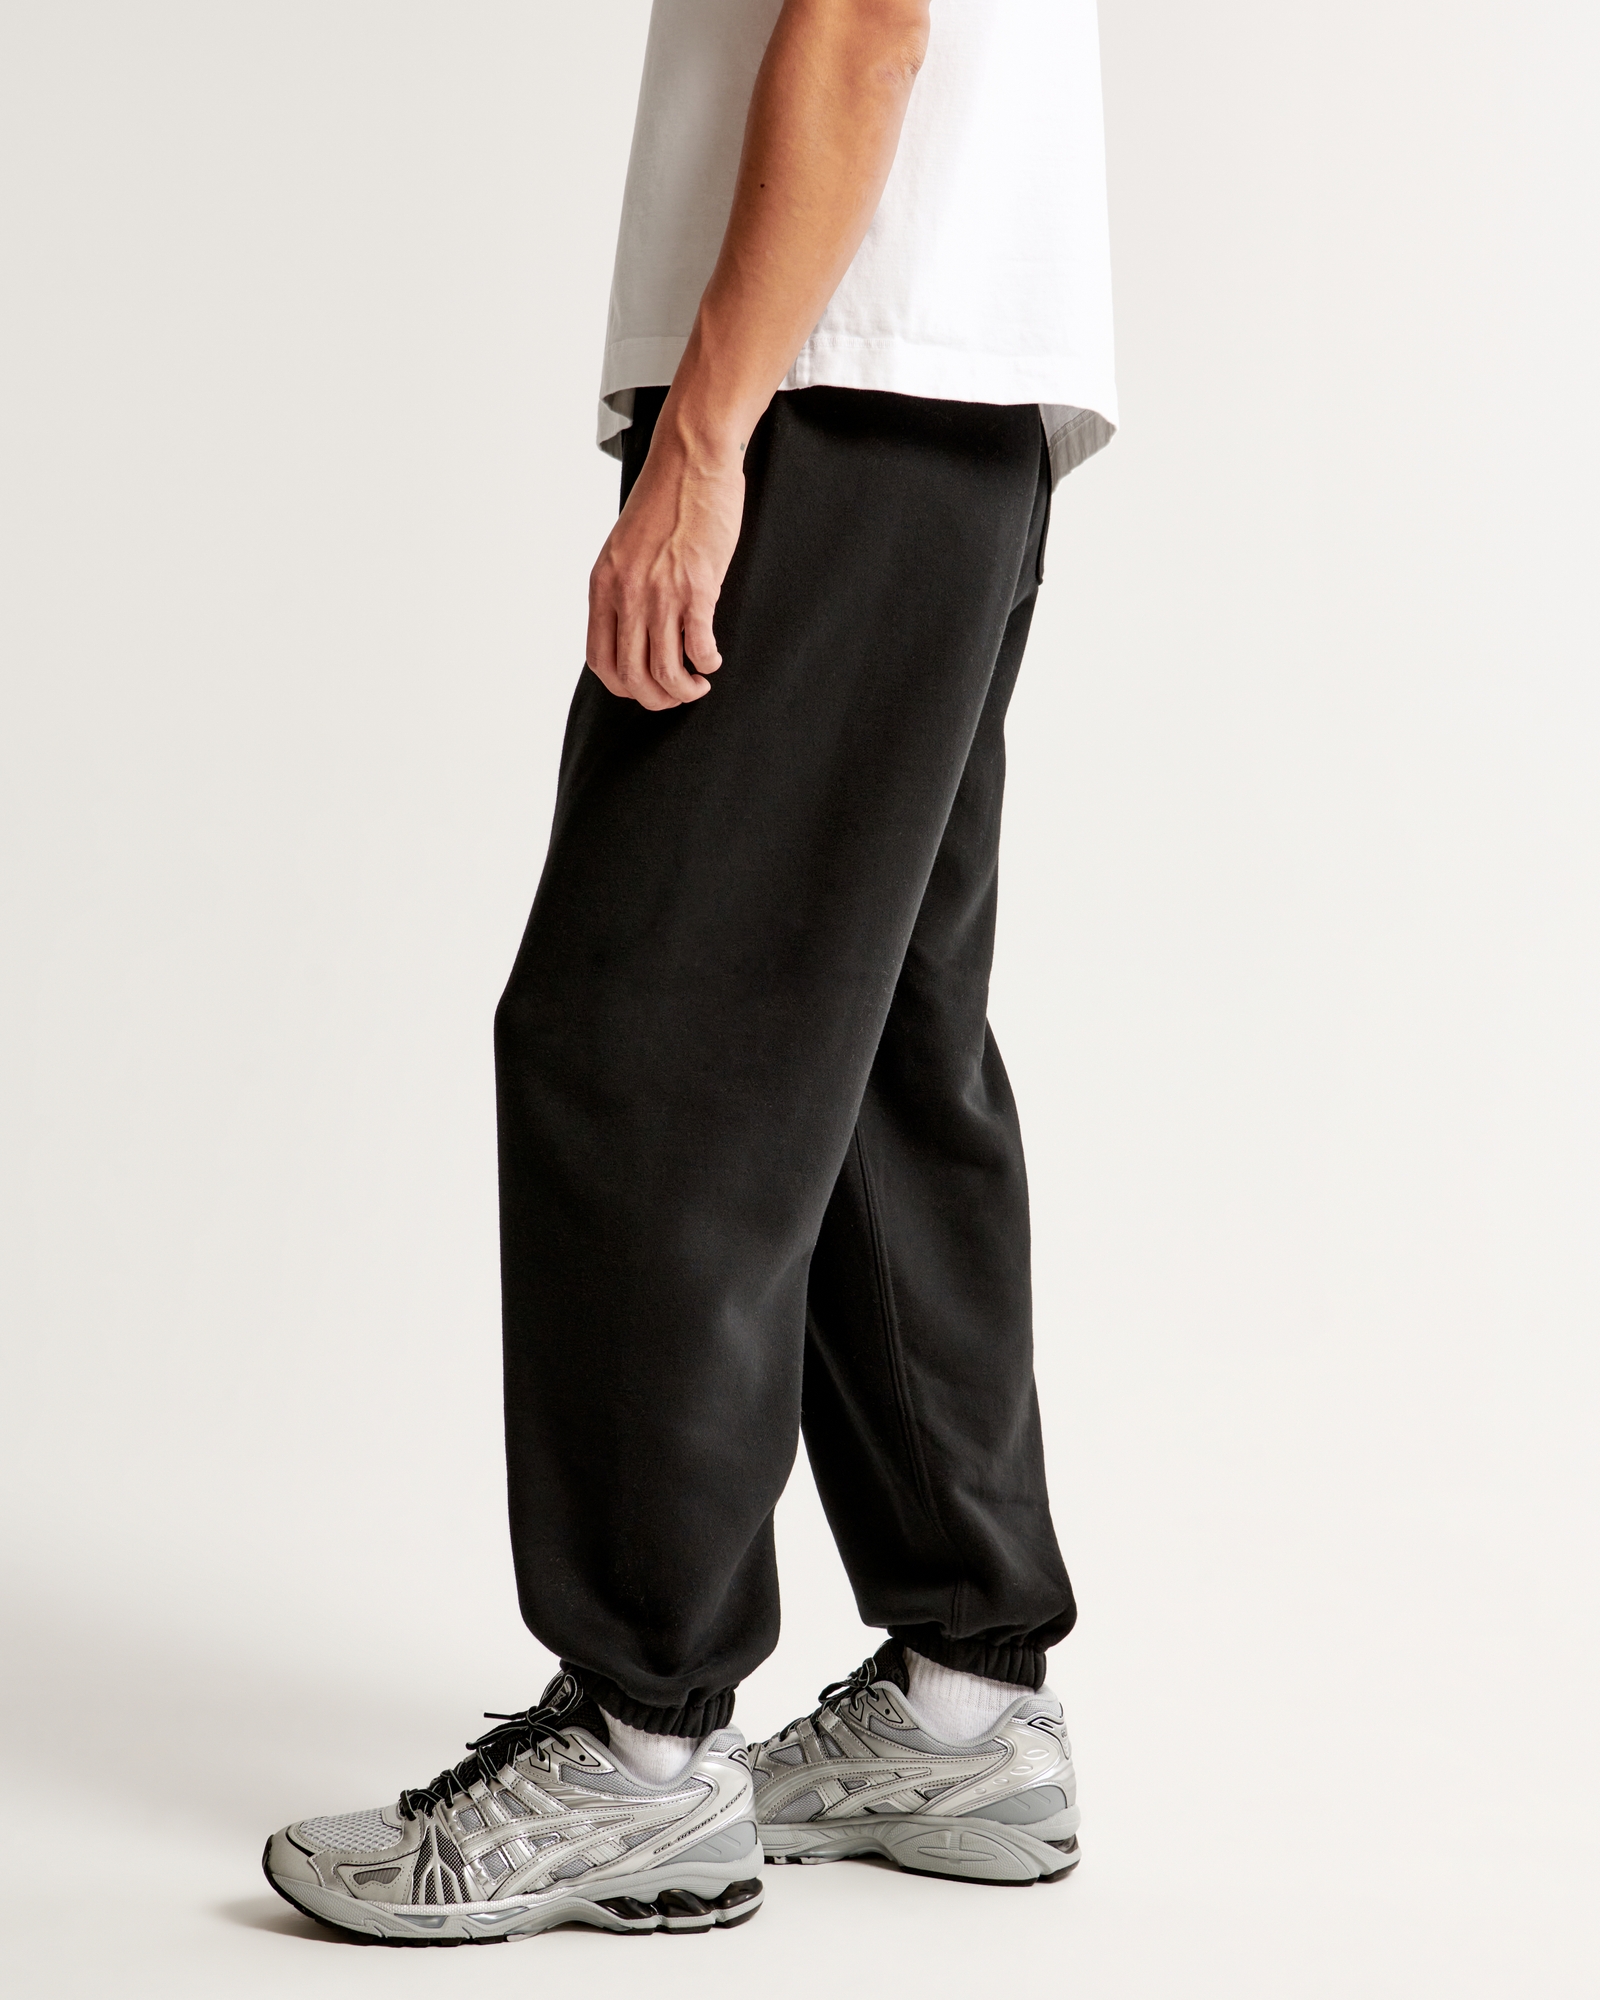 Advbridge New Multi-Pockets Sweatpants Cotton Men Baggy Joggers